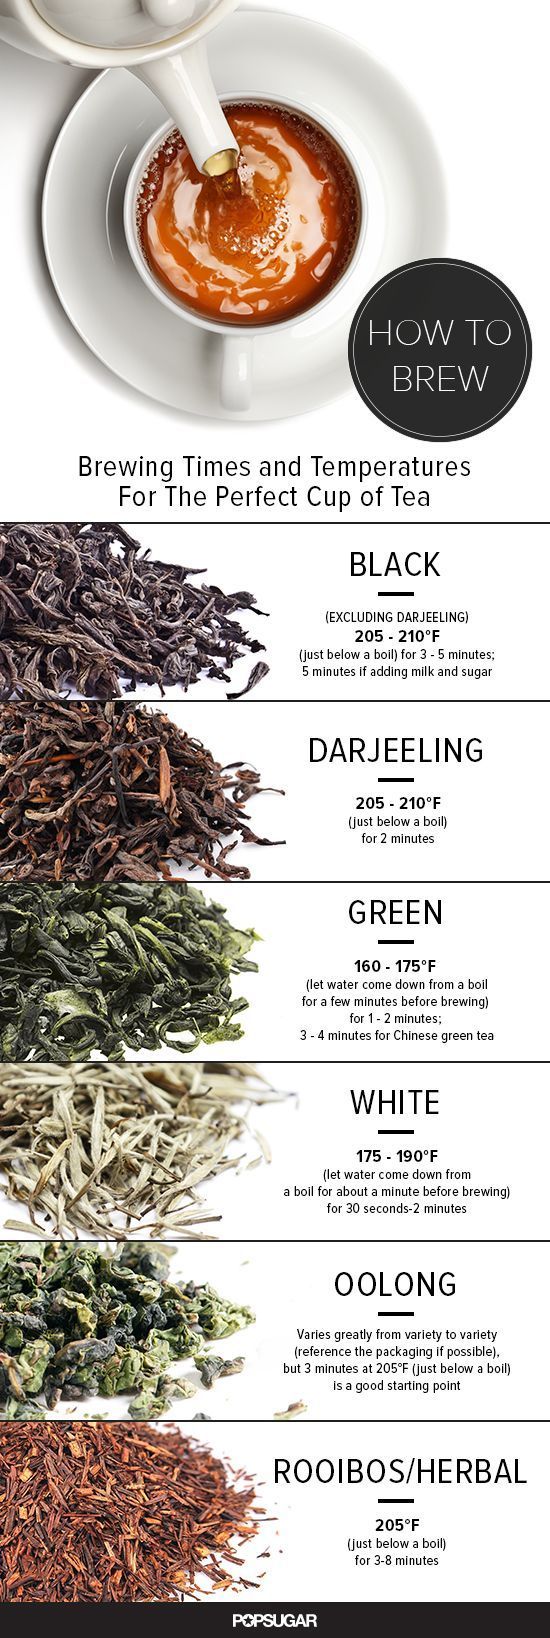 Learn how to brew tea like